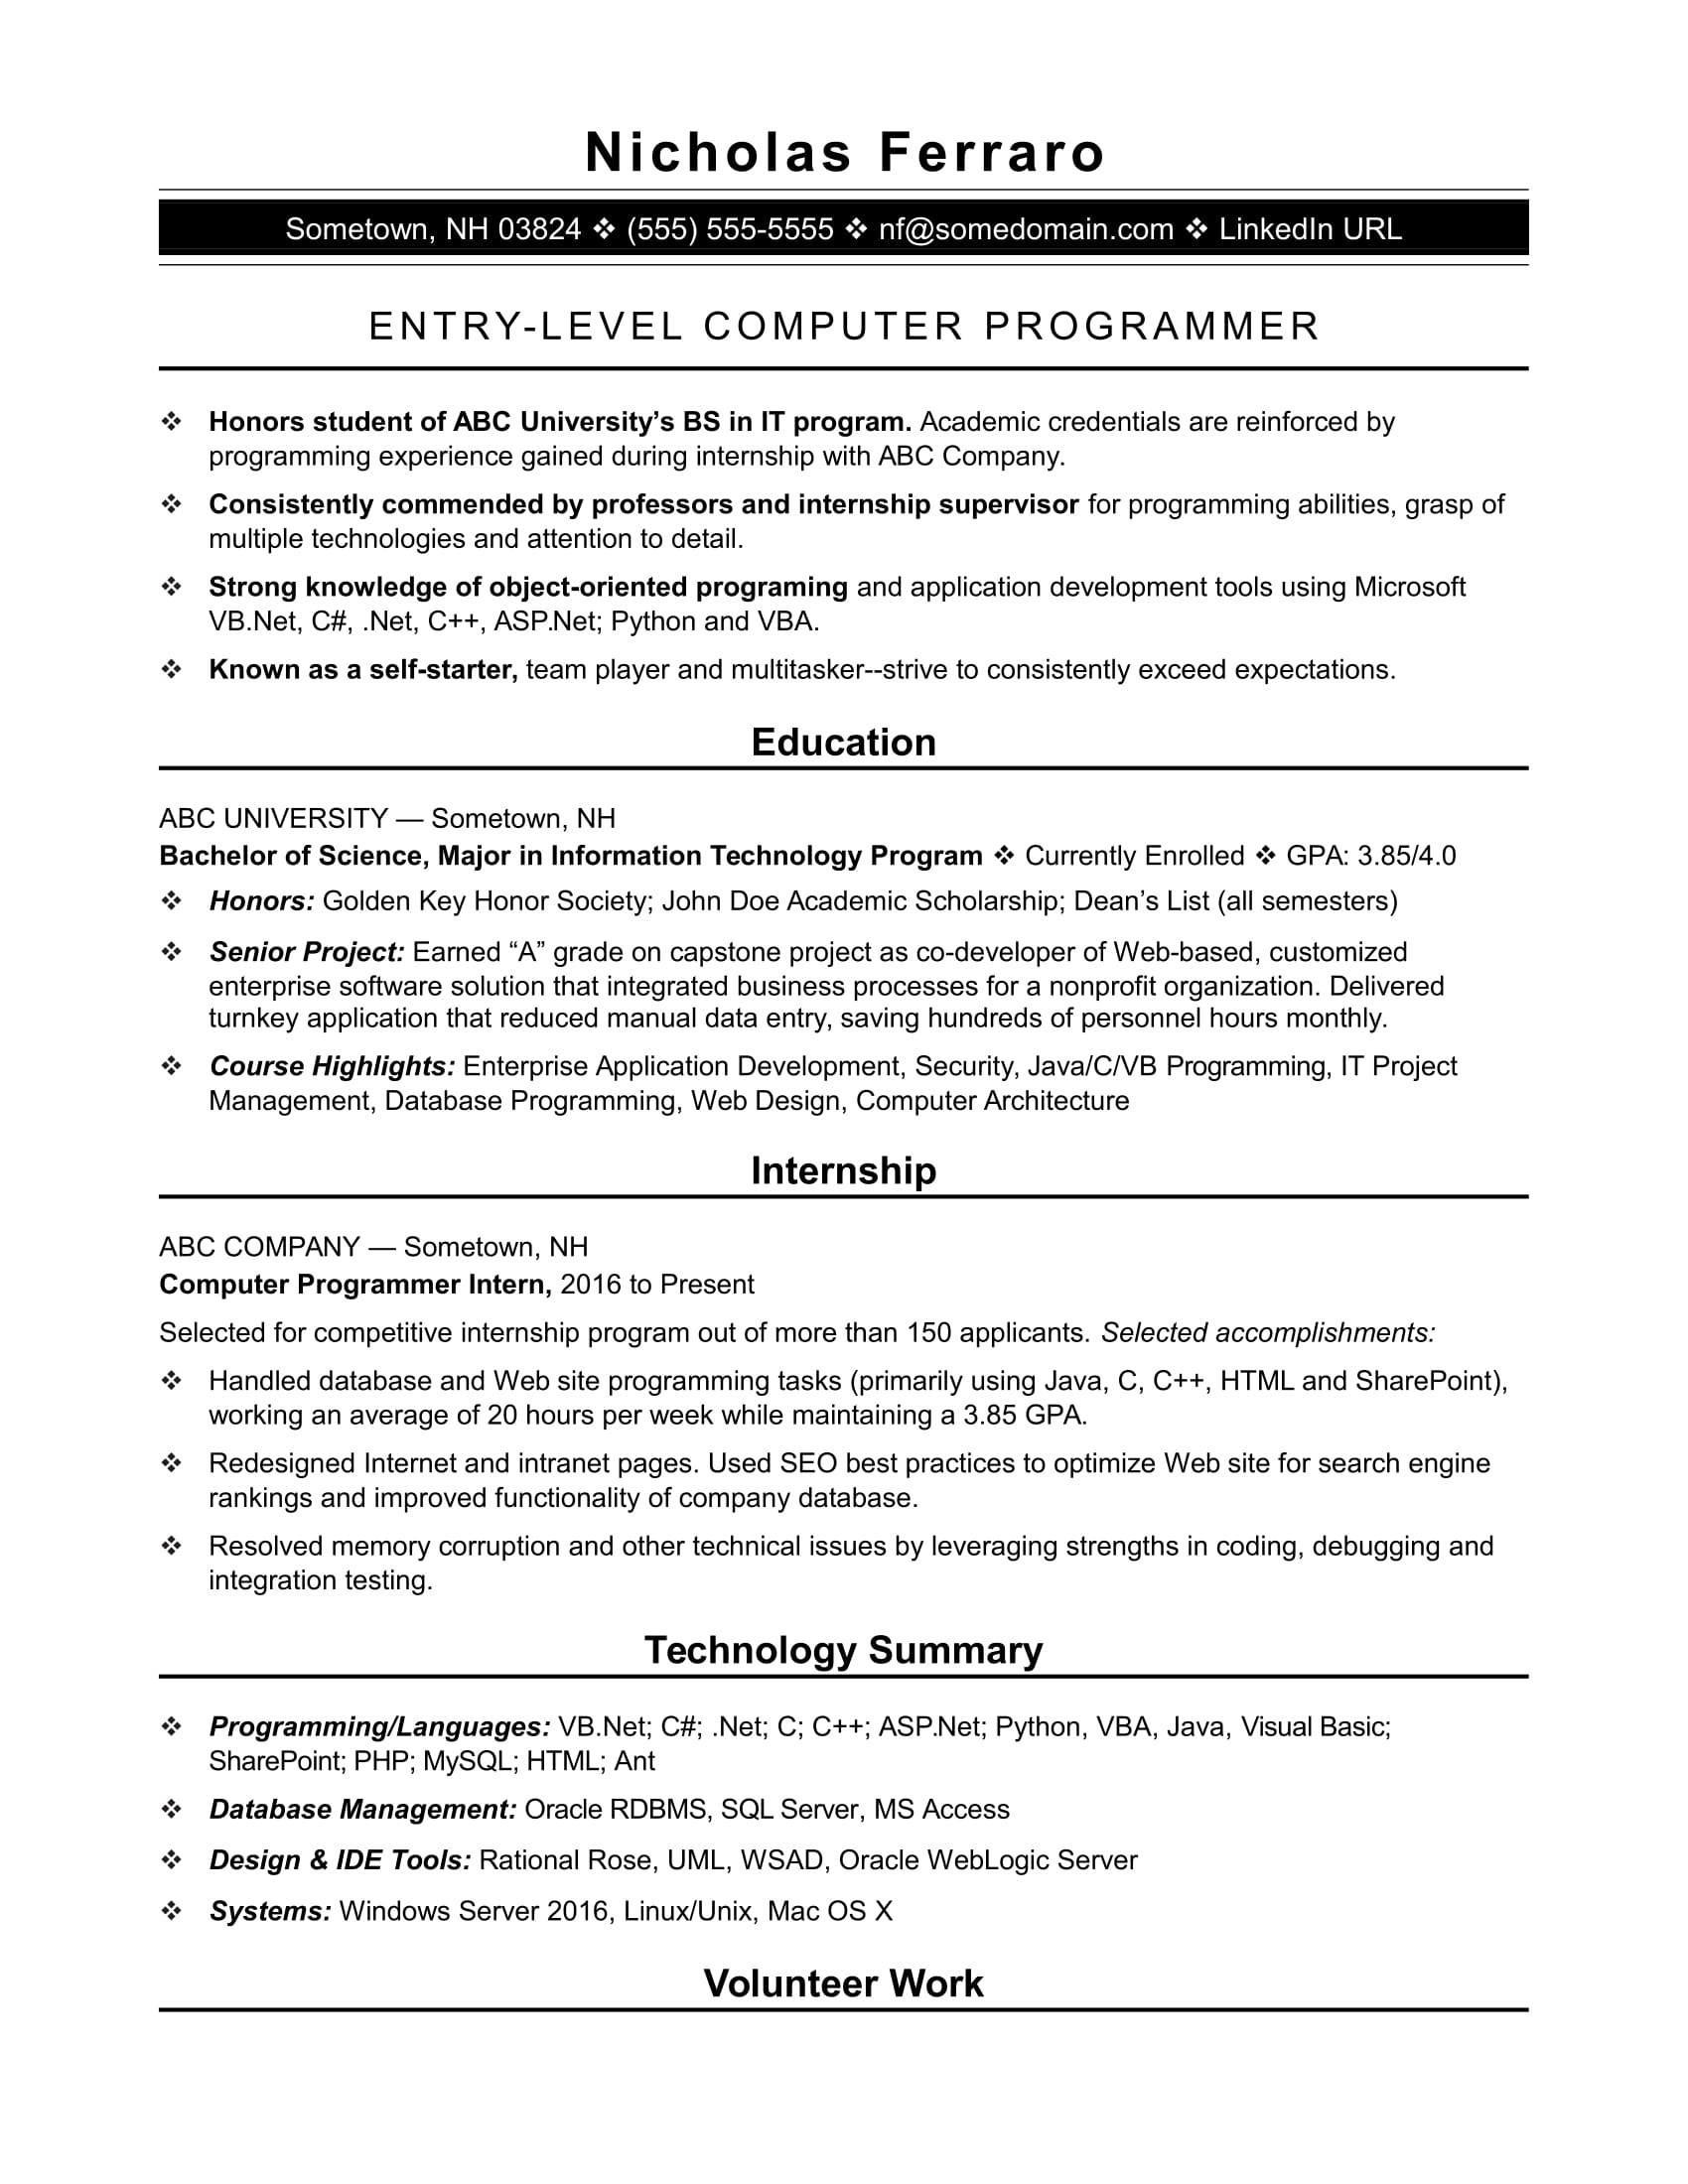 Information Technology Sample Resume area Of Strength Entry-level Programmer Resume Monster.com